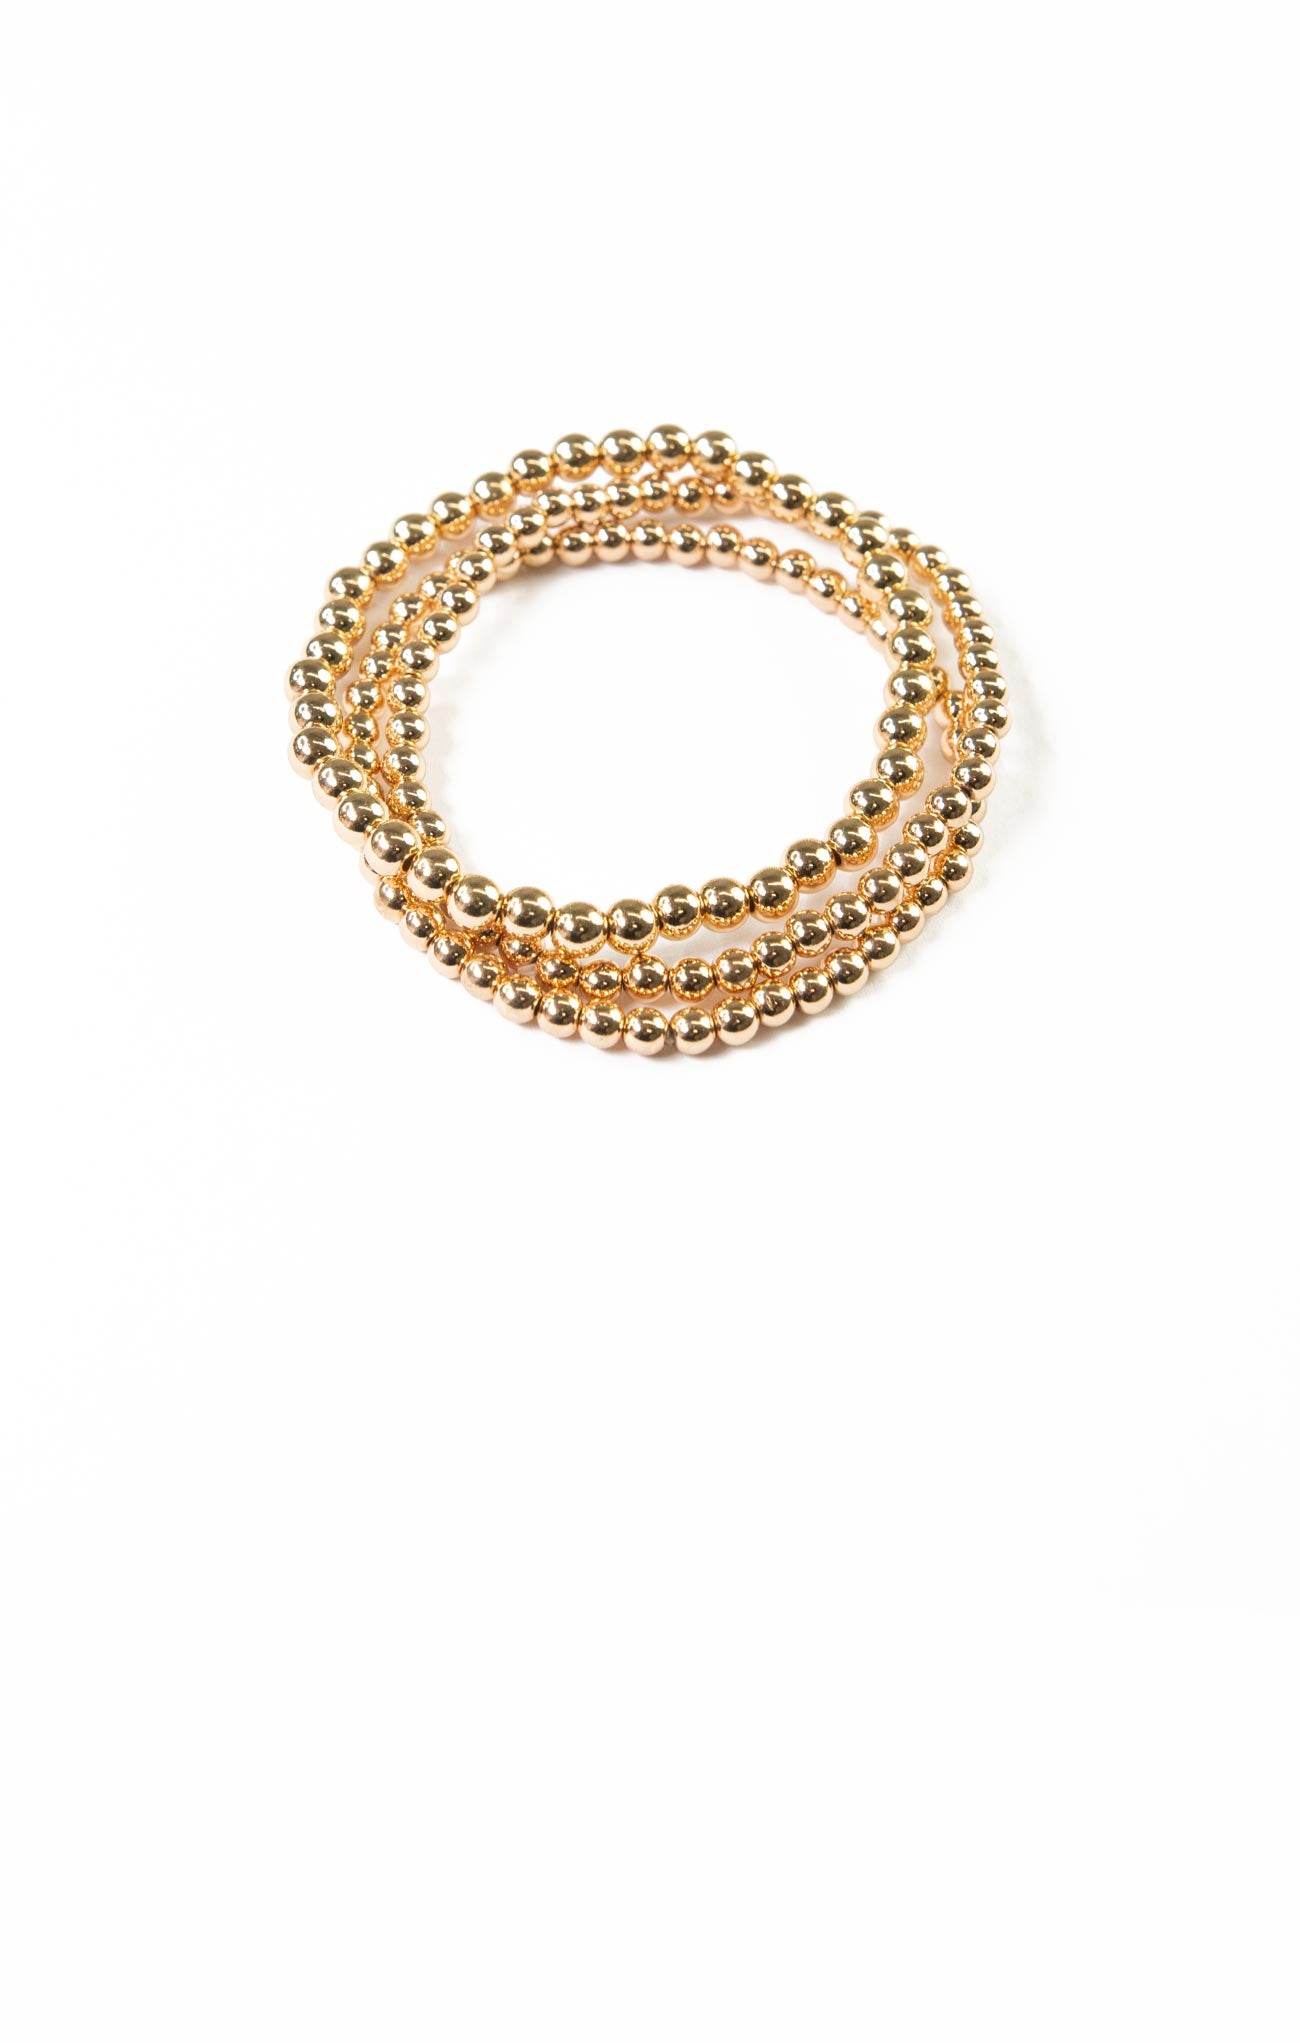 PLAIN BEADED BRACELET SET-gold,silver,three bracelet set,beaded,different sized bracelet strands,stretch